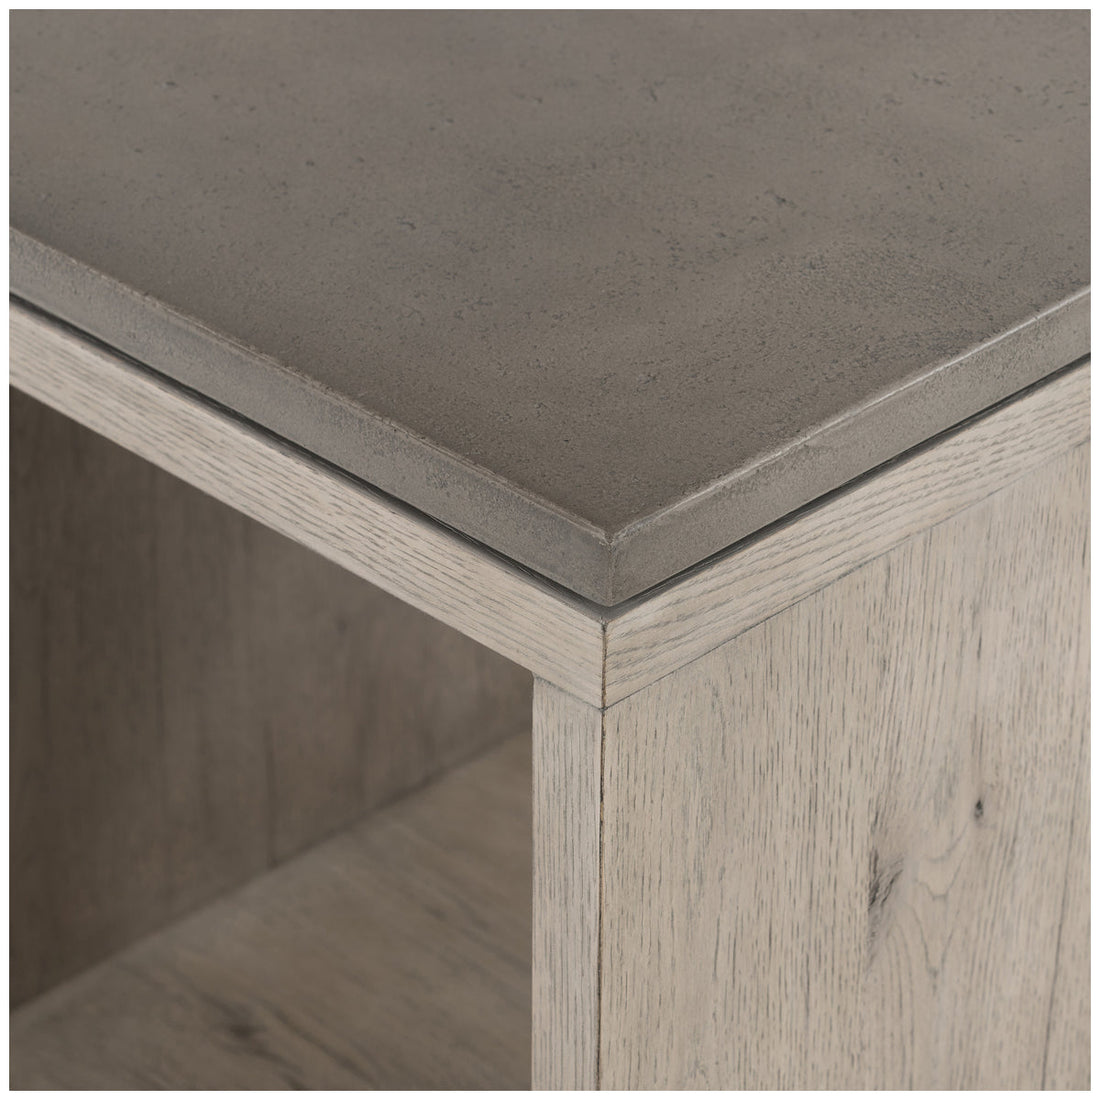 Four Hands Bina Faro End Table - Dark Grey Concrete